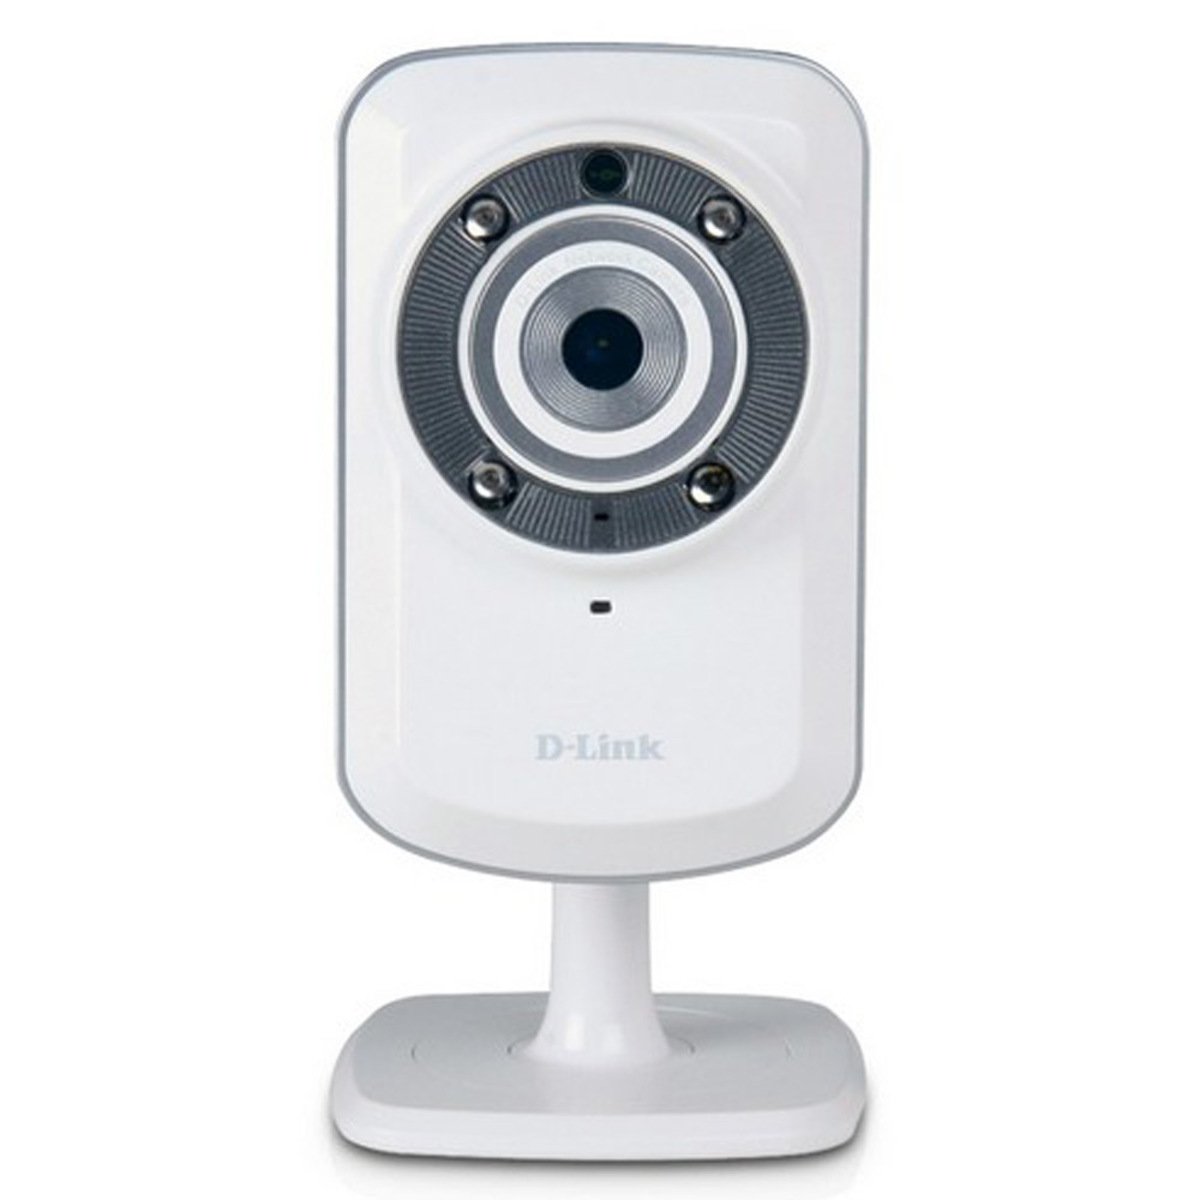 D-link Wireless IP Camera DCS-932L